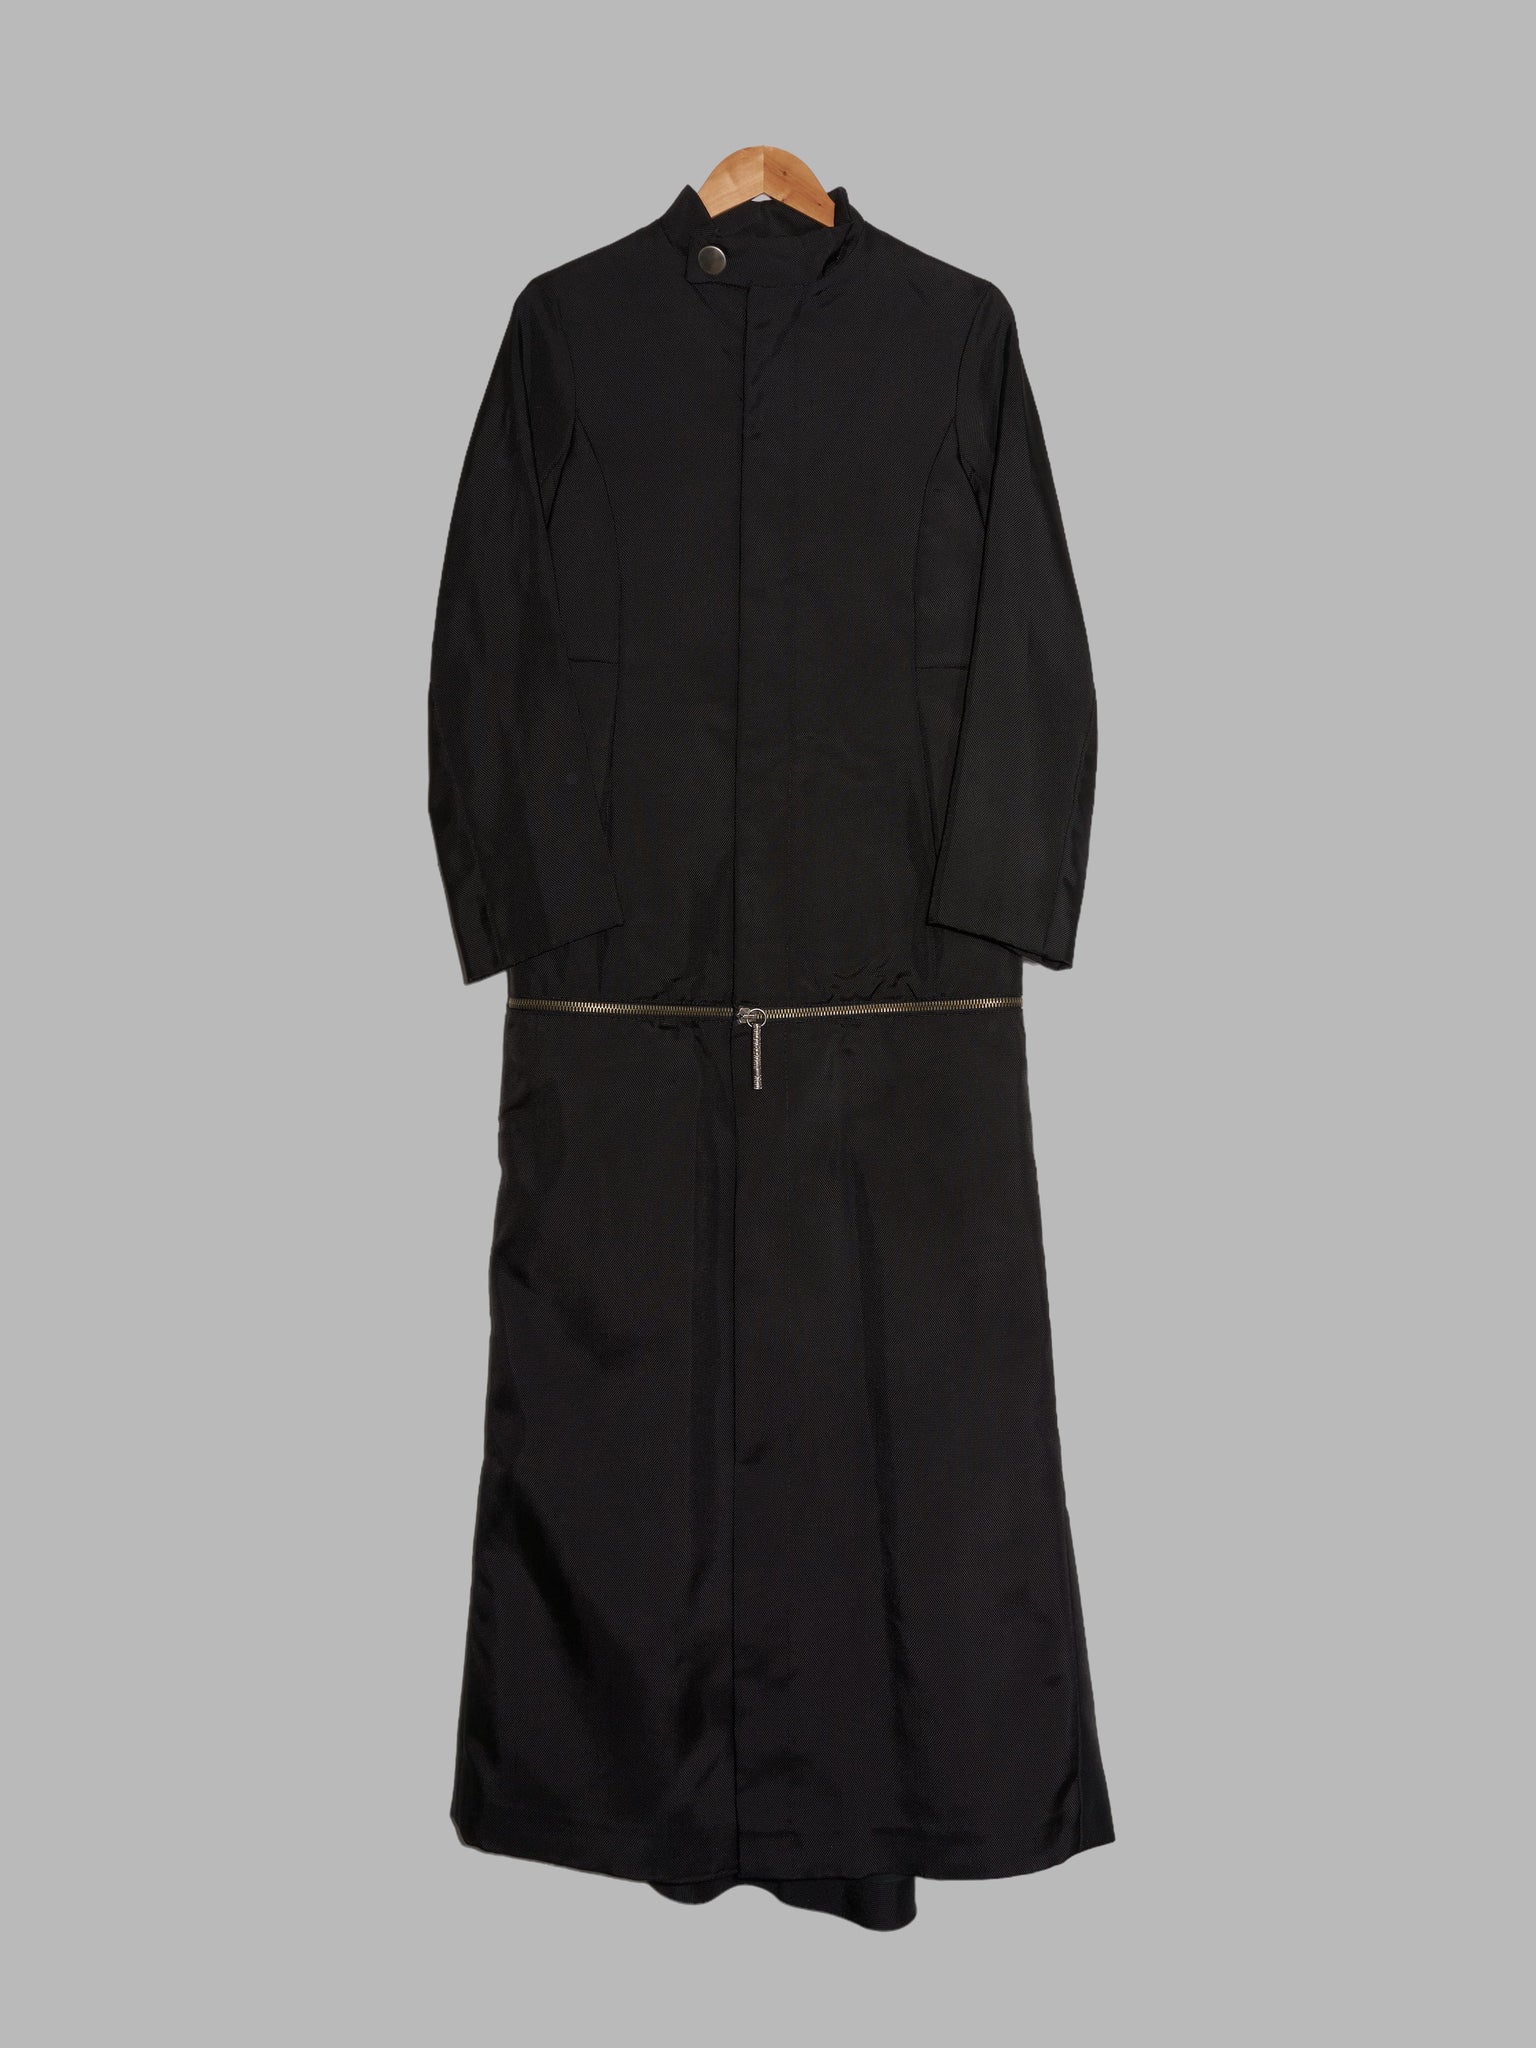 Dirk Bikkembergs winter 1996 black ballistic nylon three length coat - size 40